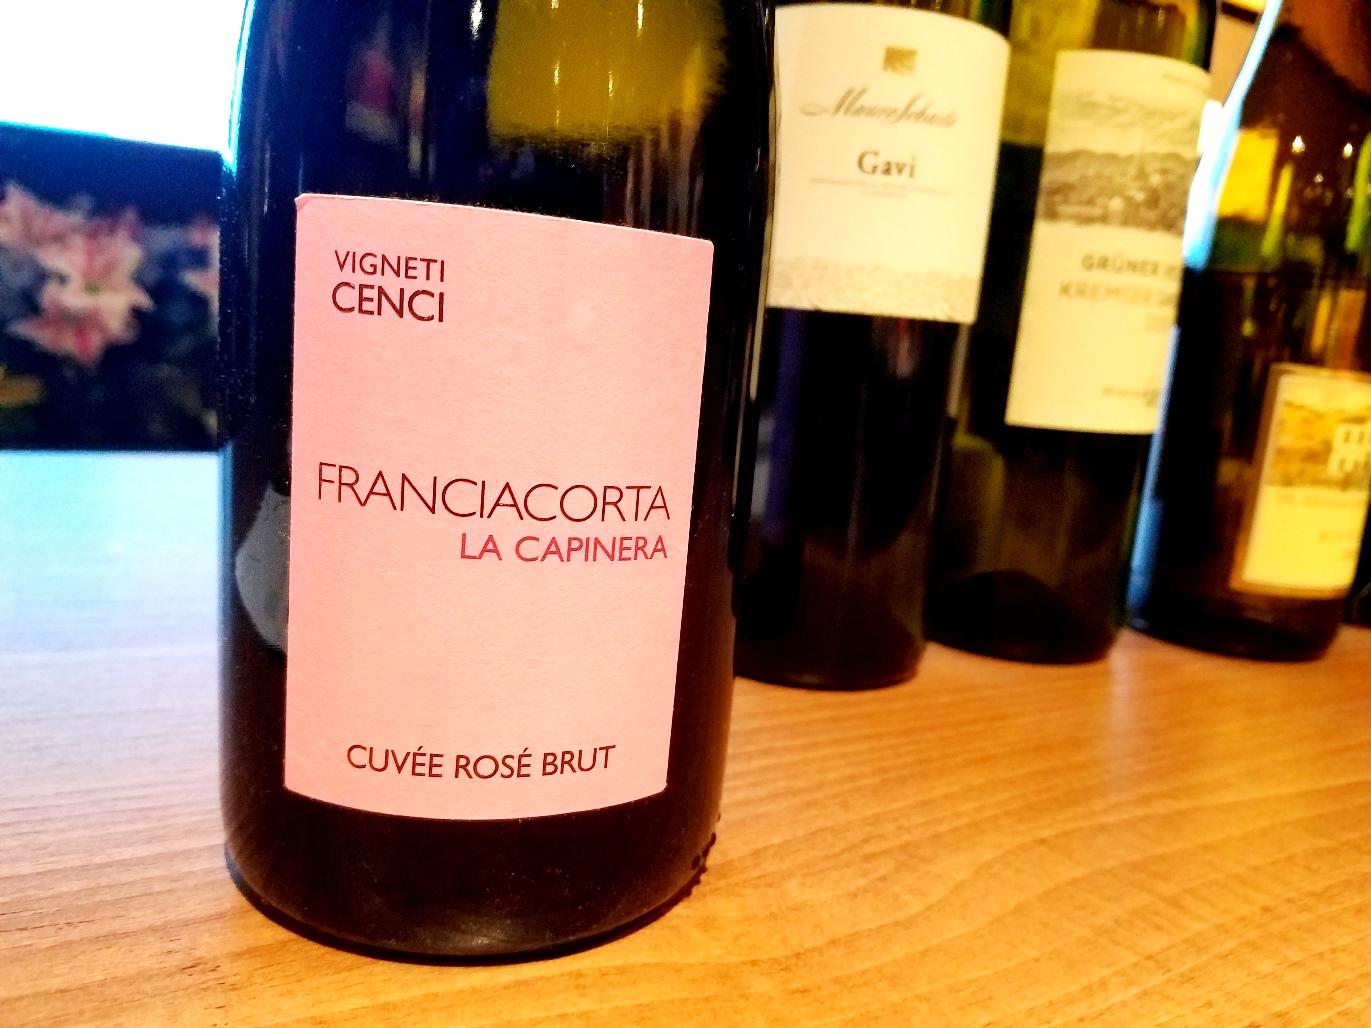 Vigneti Cenci, Franciacorta La Capinera Cuvée Rosé Brut, Italy, Wine Casual